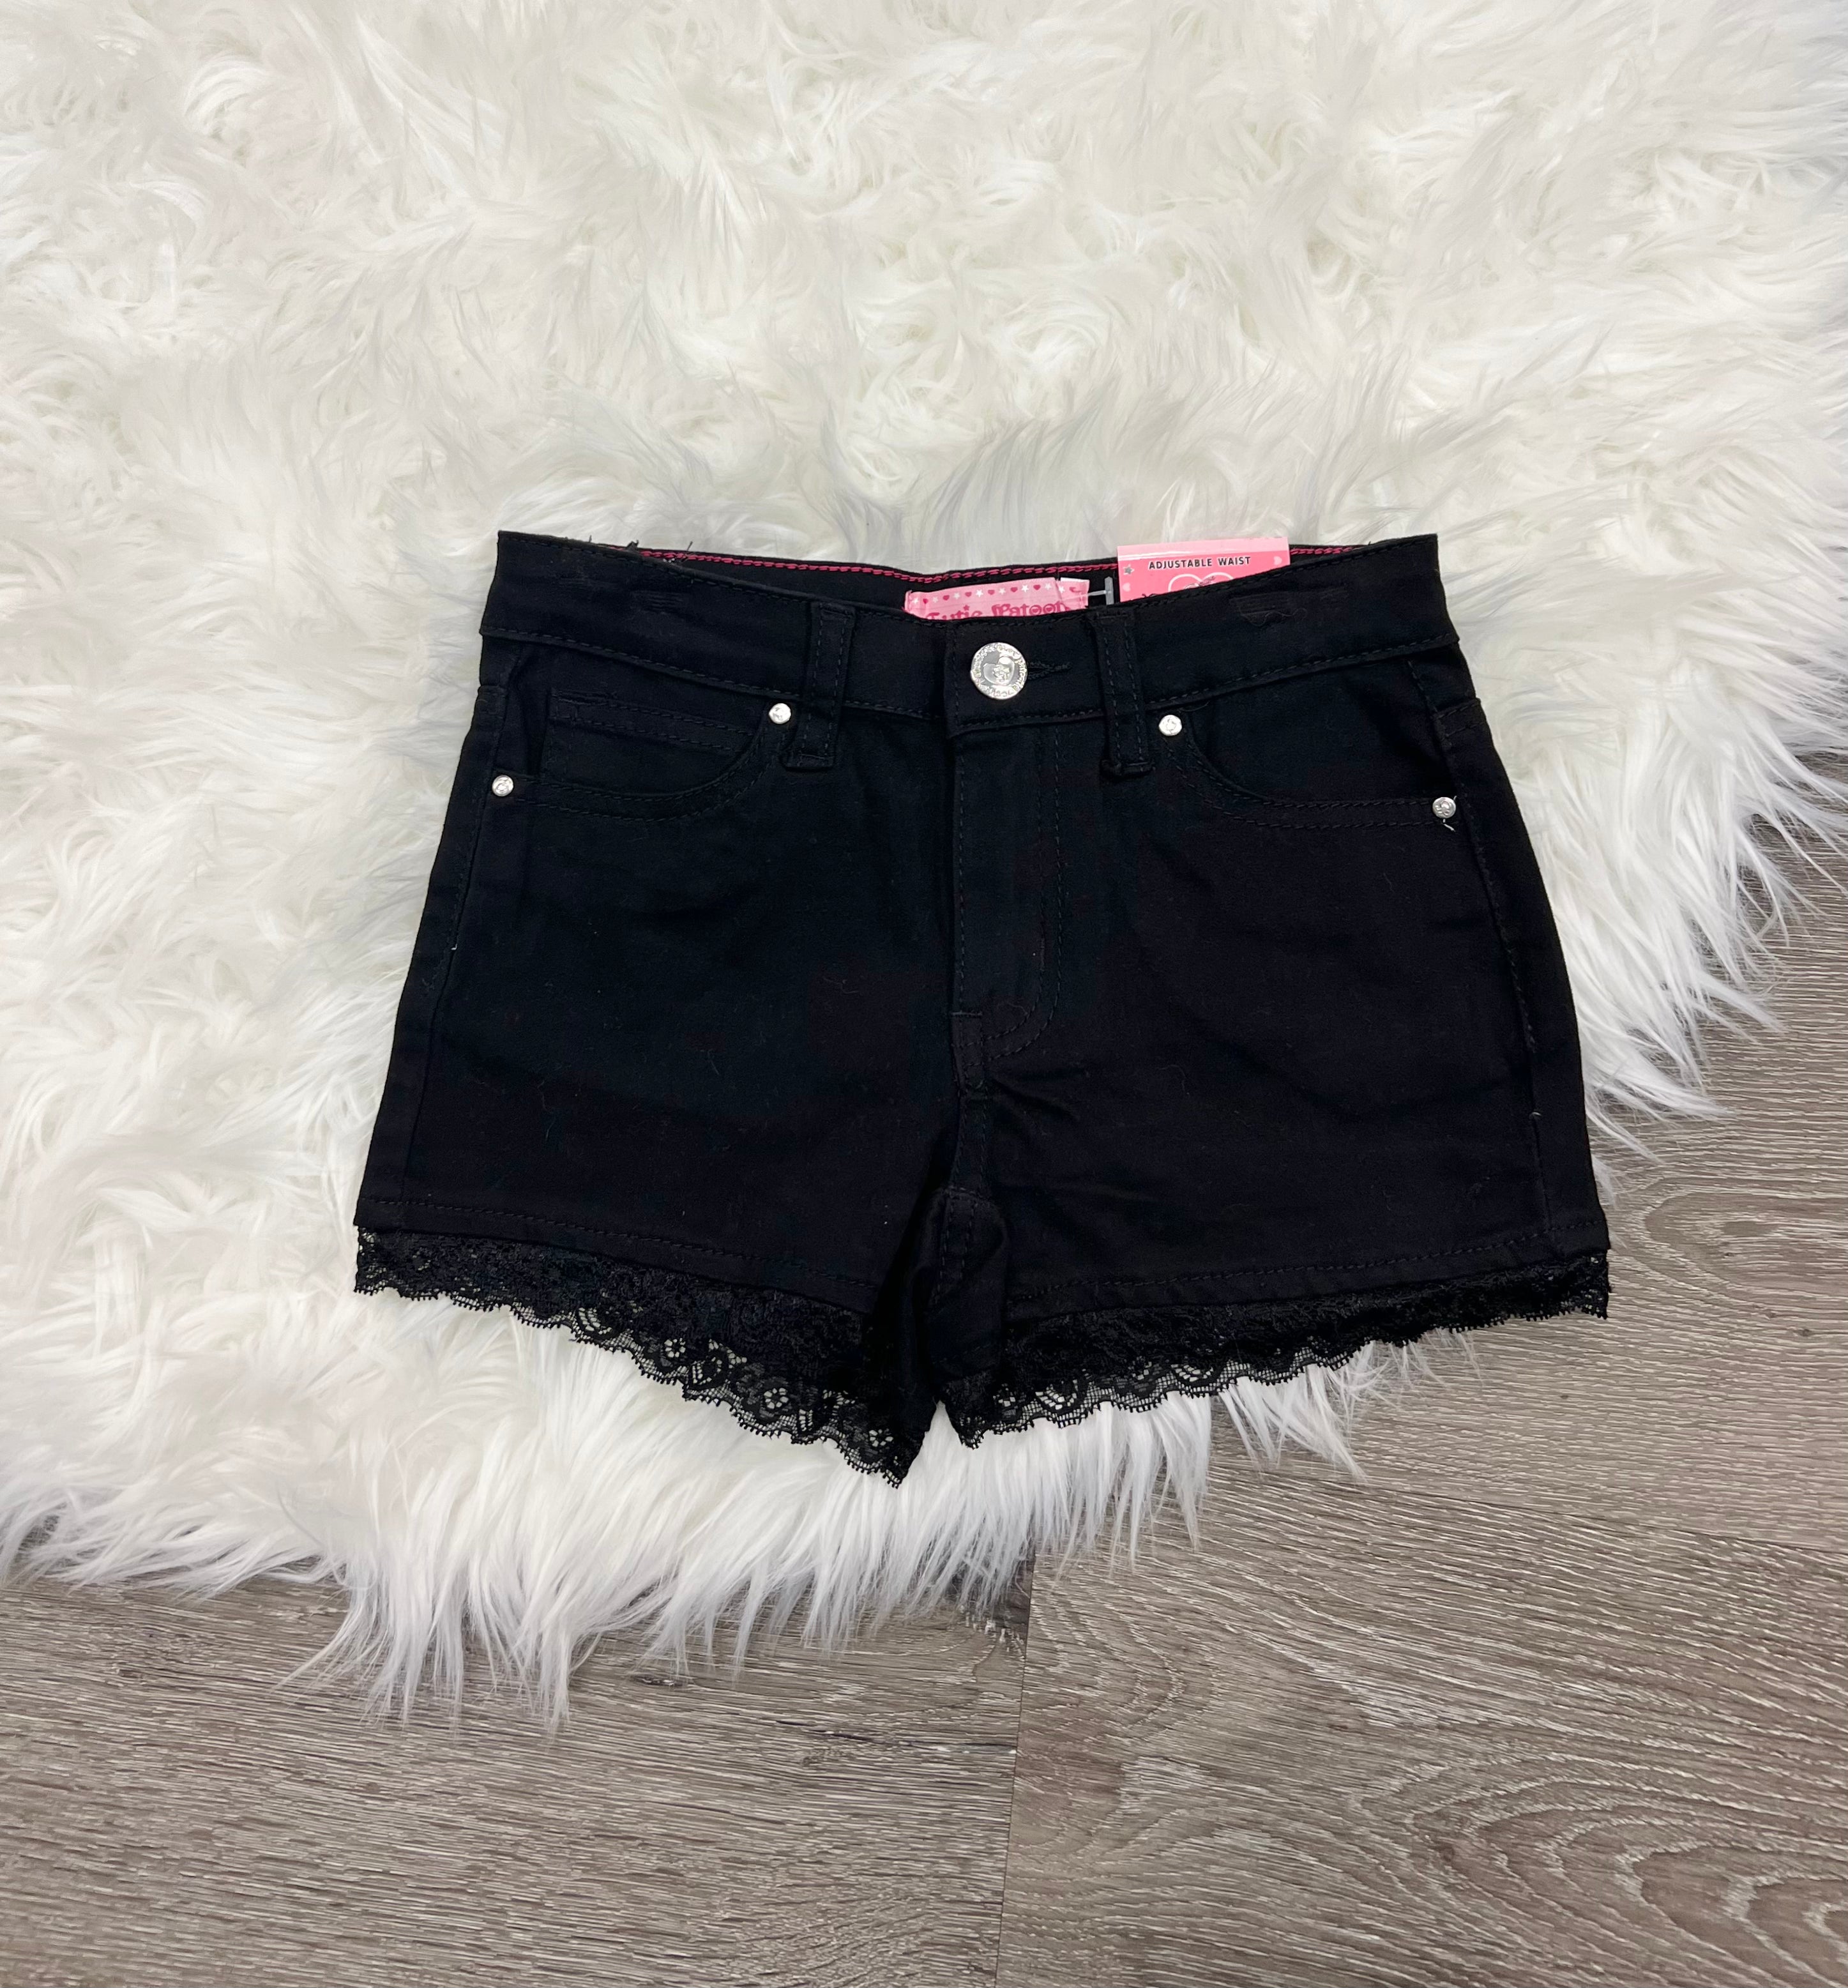 Cutie Patootie Black Lace Hem Shorts